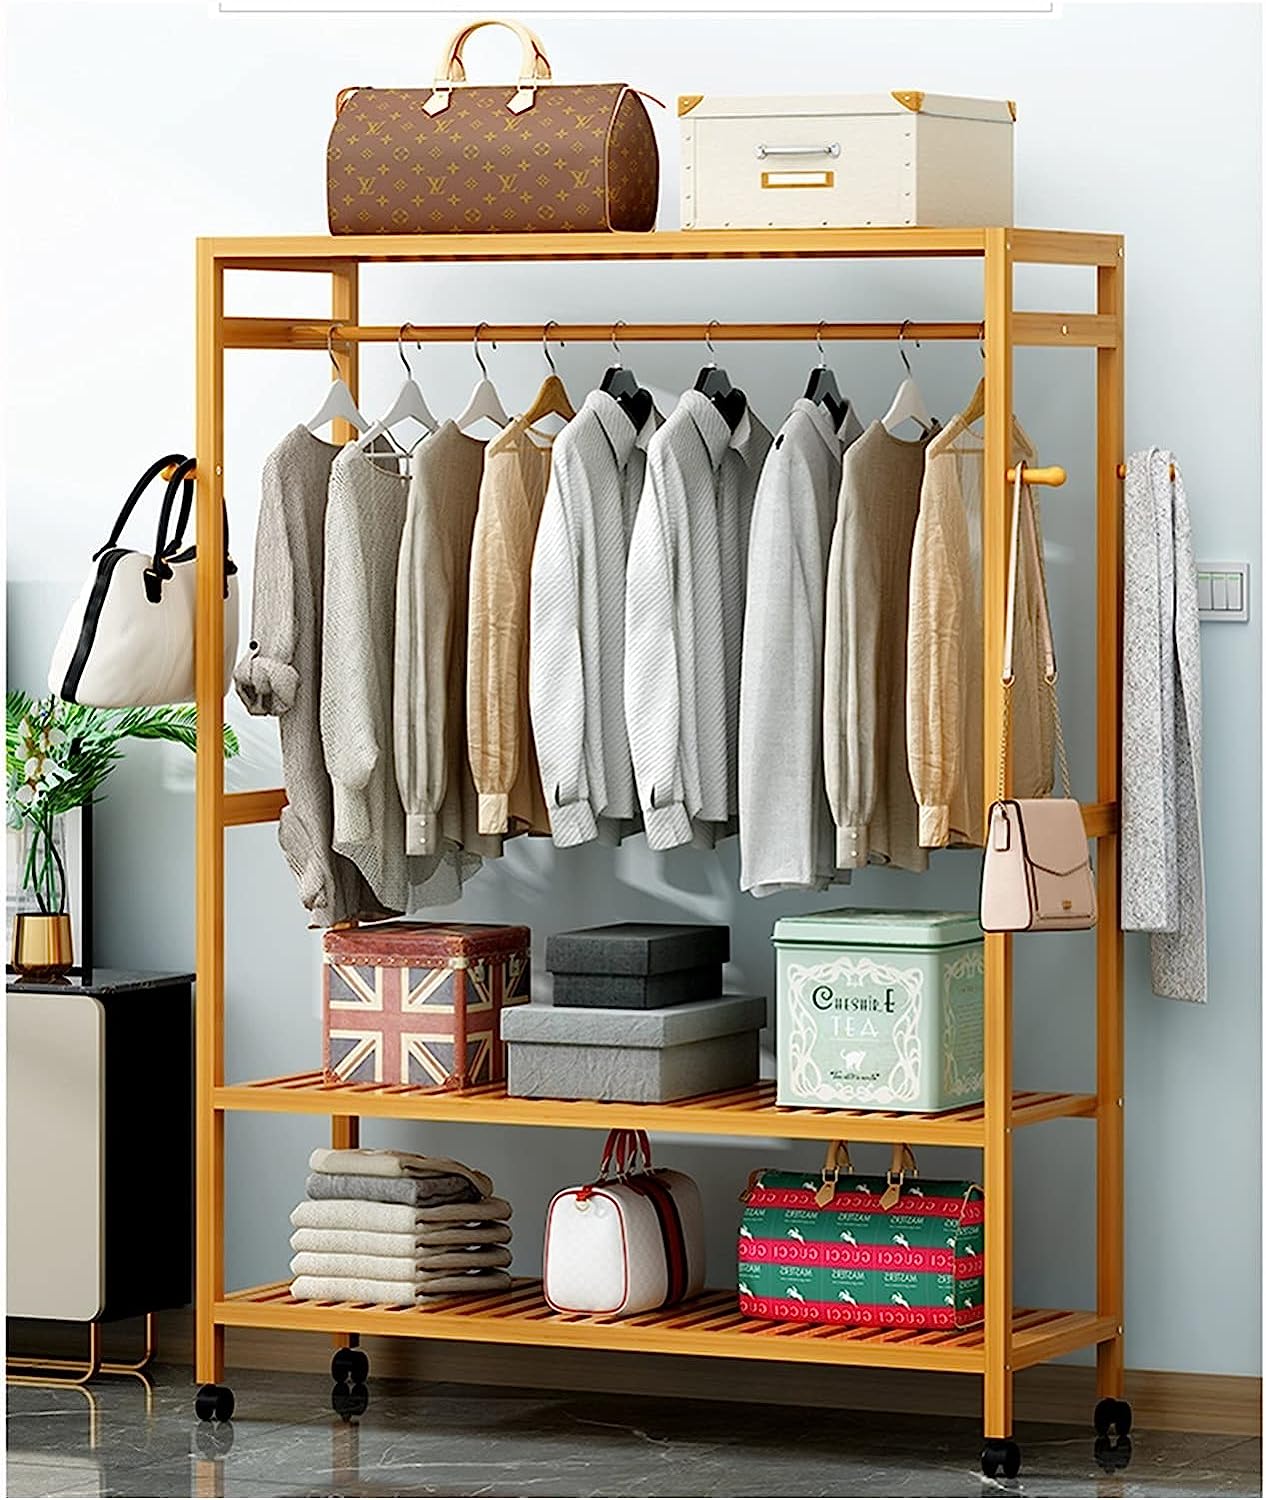 How To Organize A Coat Closet